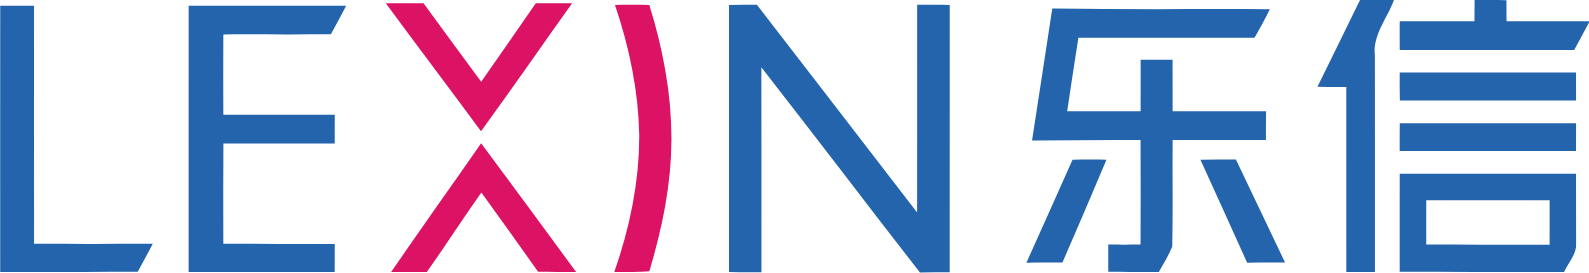 LexinFintech Holdings
 logo large (transparent PNG)